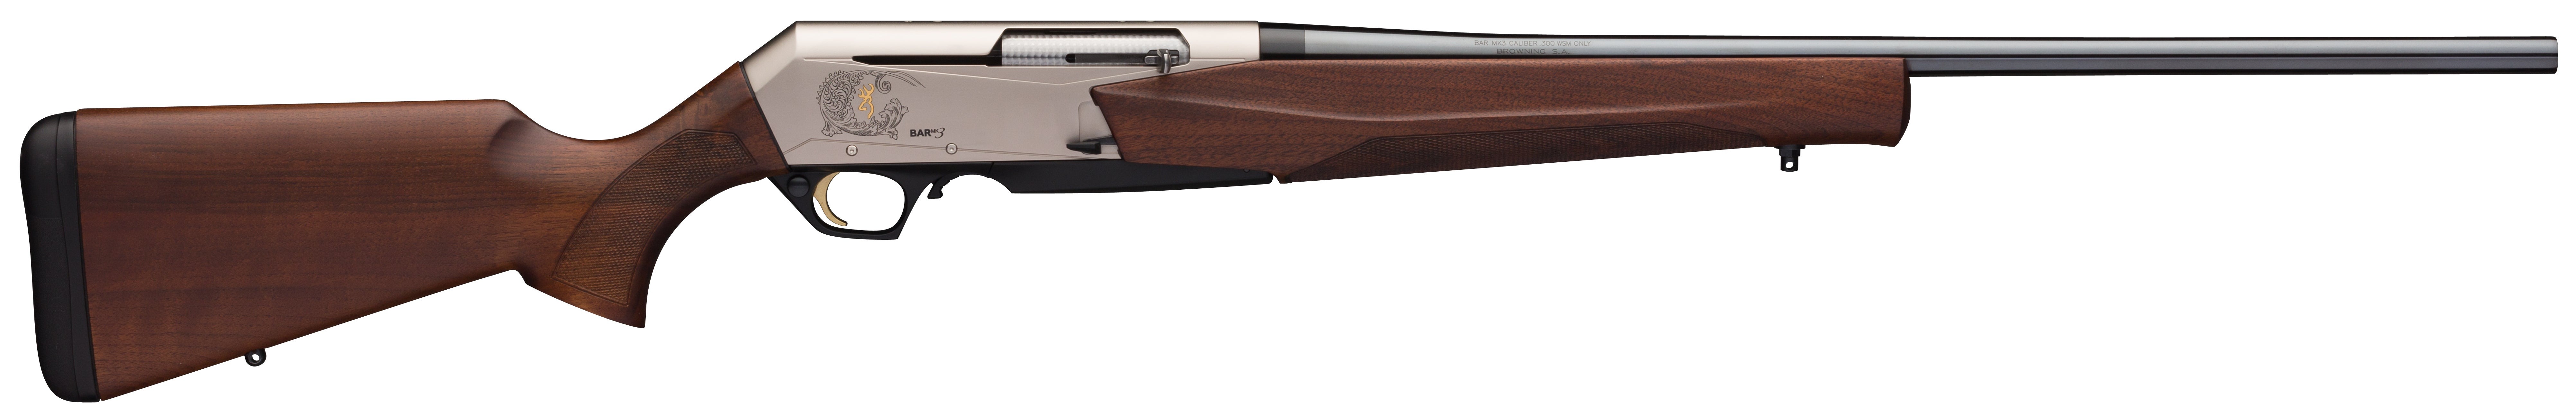 Browning, BAR, Mark III, Semi-automatic Rifle, 308 Winchester, 22" Barrel, Blued Finish, Walnut Stock, 4 Rounds